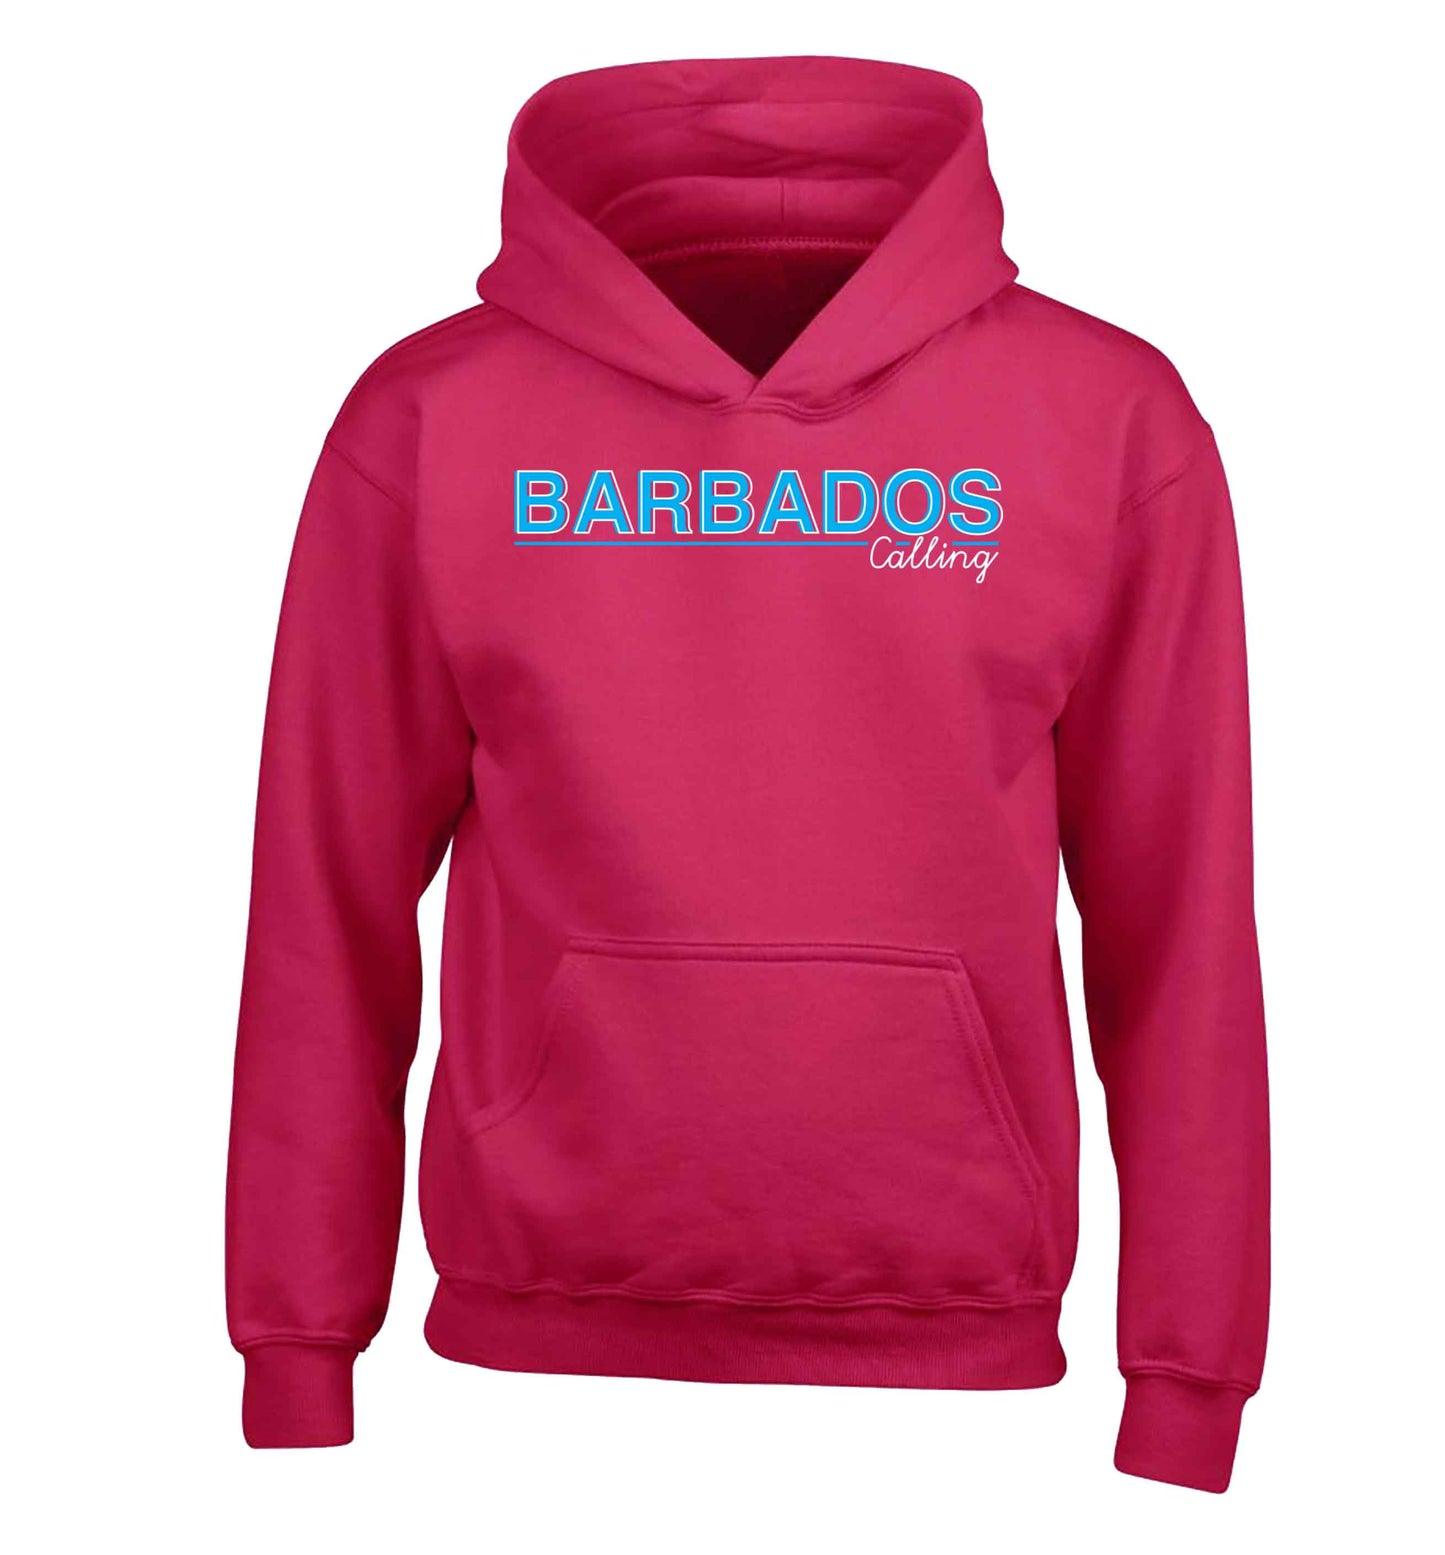 Barbados calling children's pink hoodie 12-13 Years